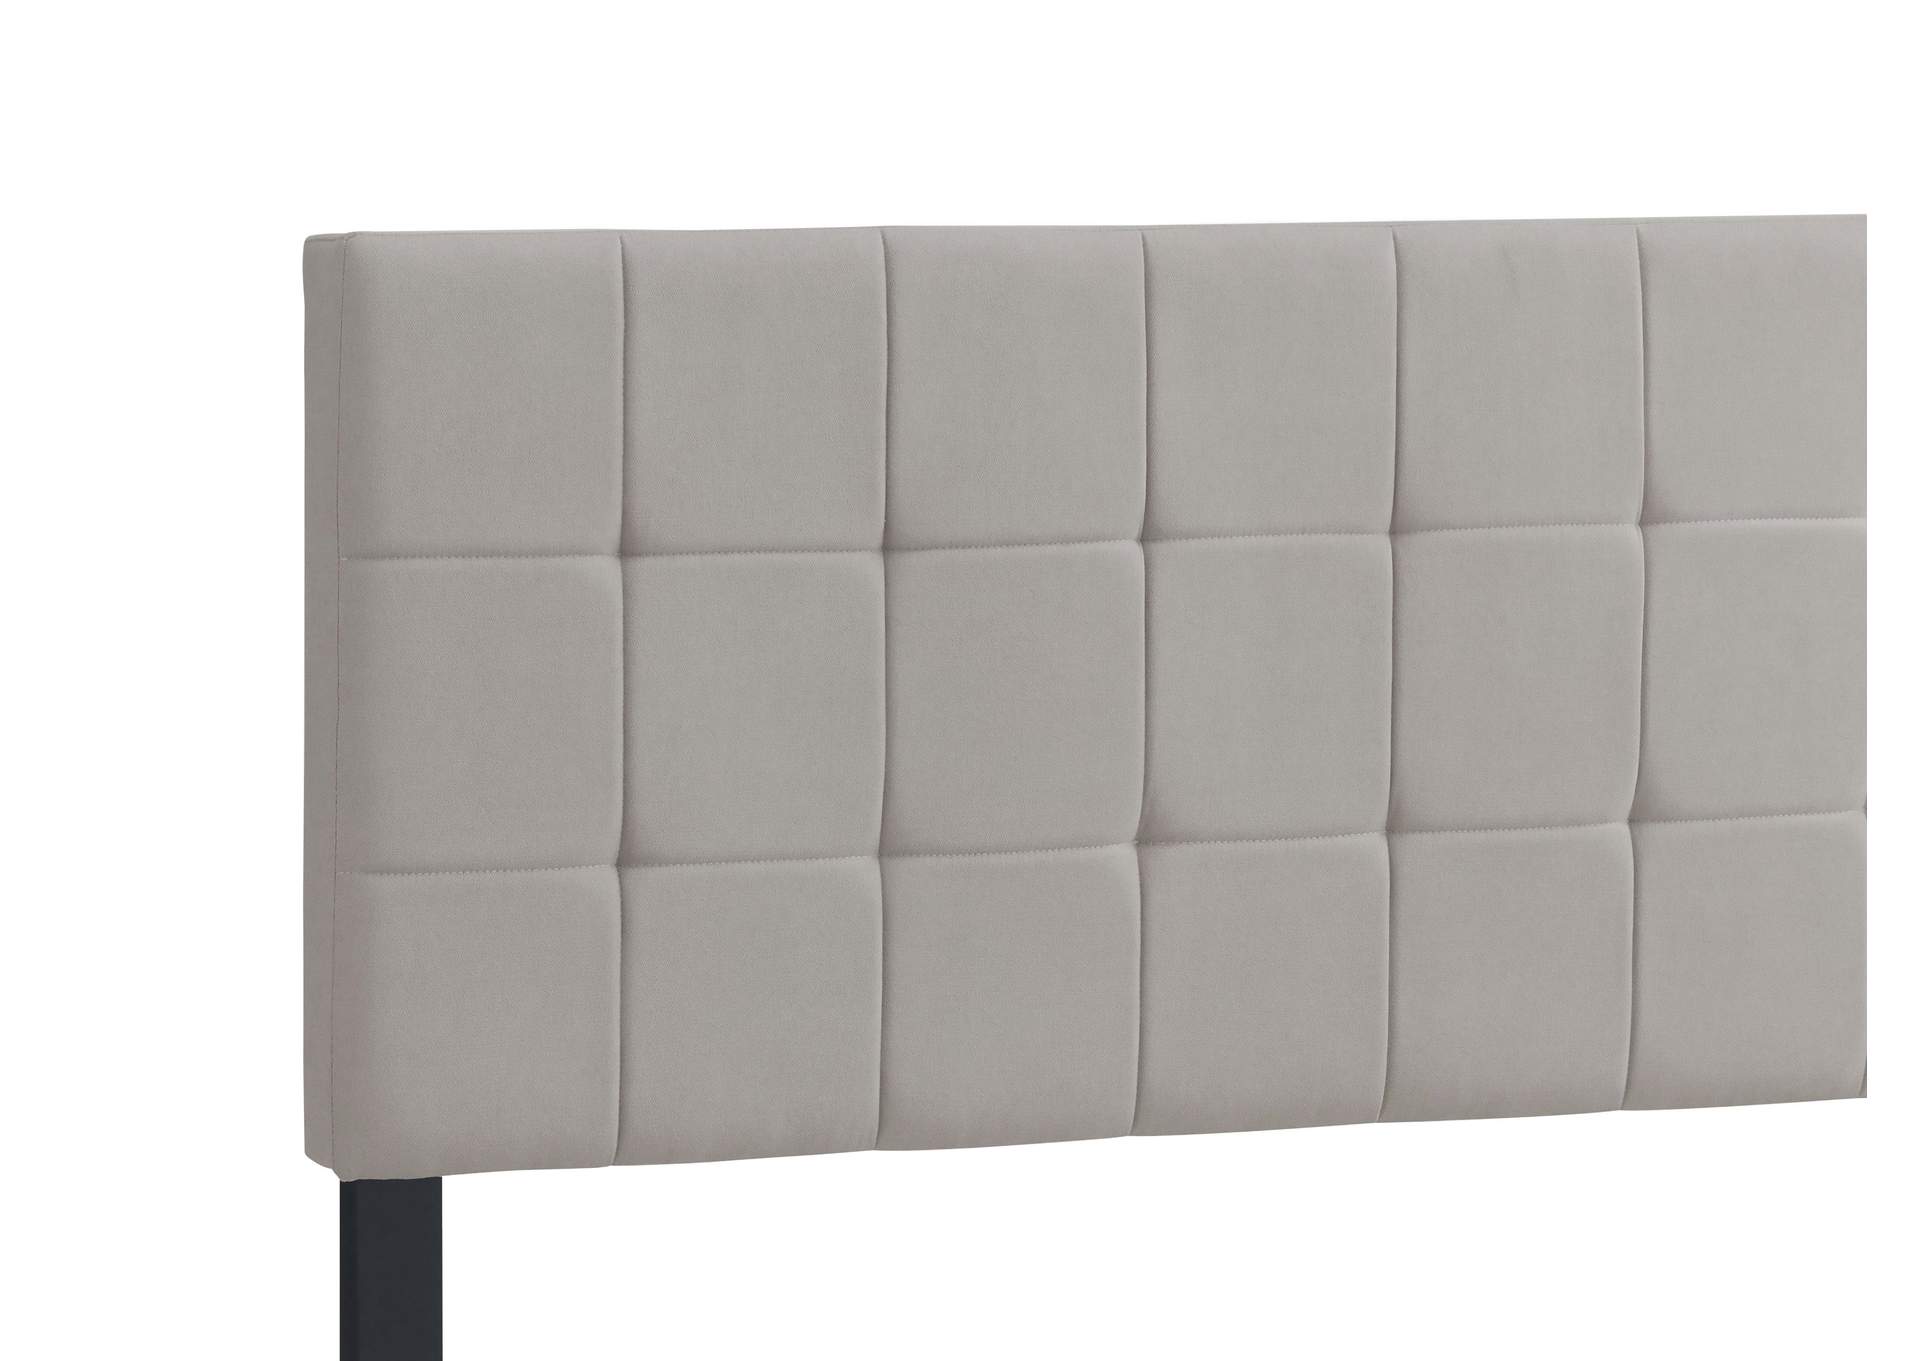 Fairfield Eastern King Upholstered Panel Bed Beige,Coaster Furniture